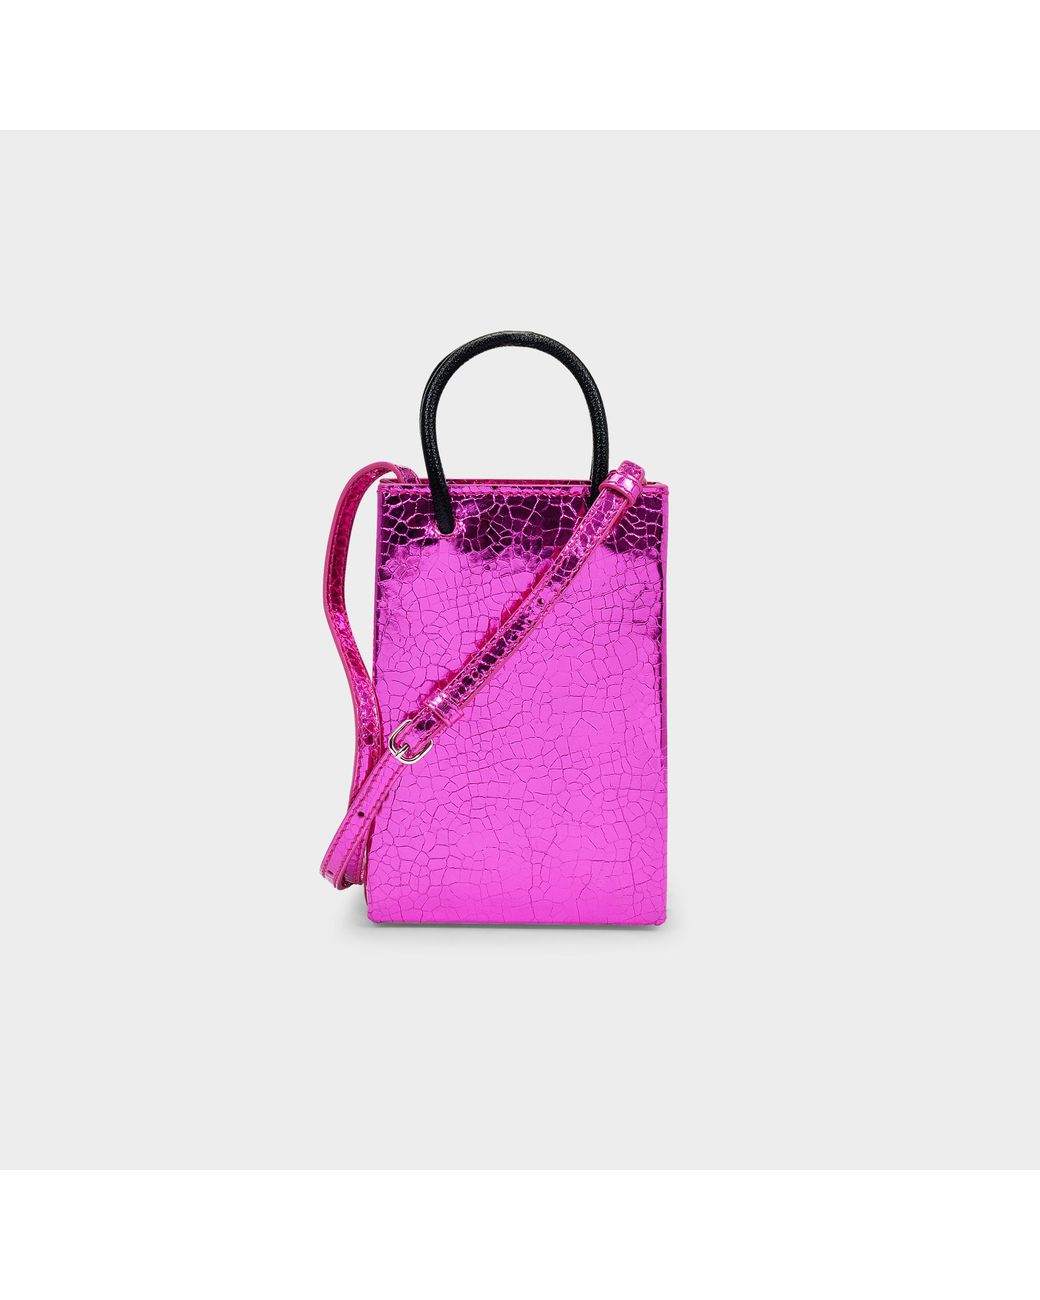 Balenciaga Phone Holder Shopping Bag In Fuchsia in Metallic | Lyst Canada